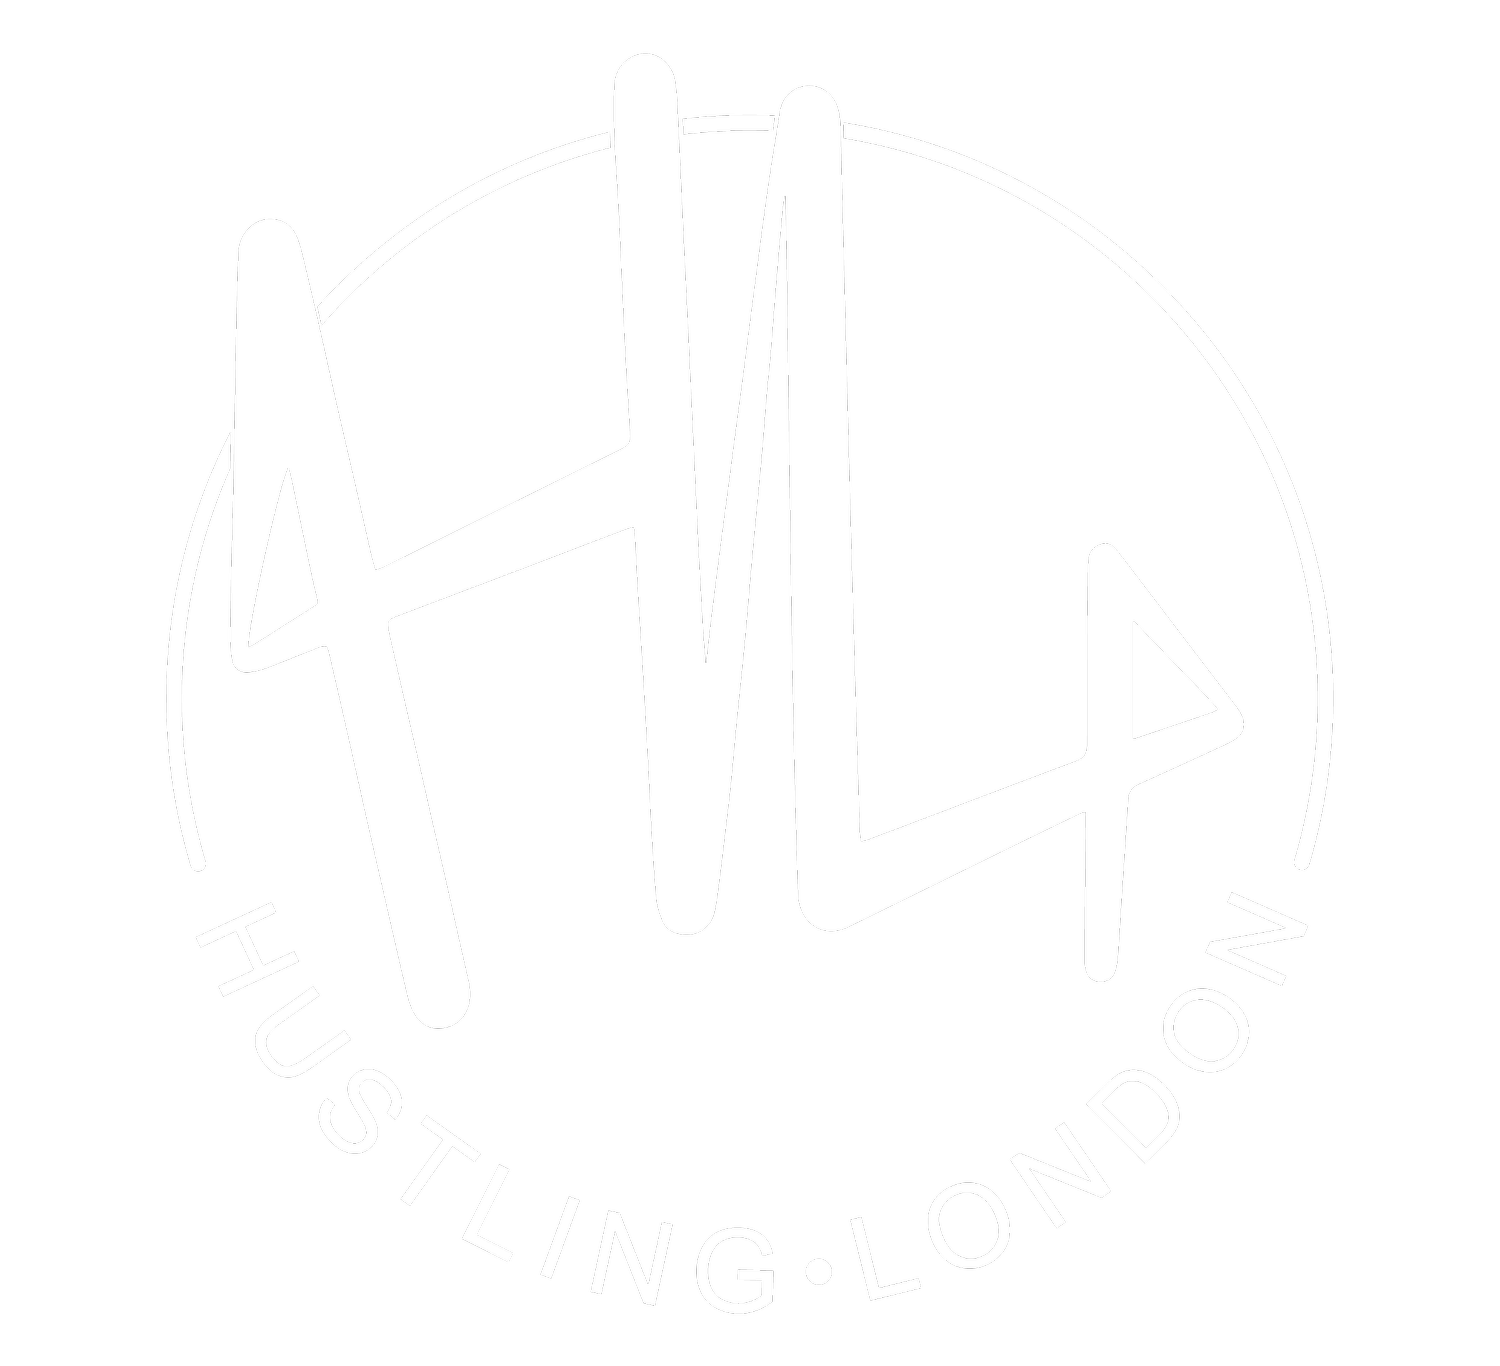 Hustling London